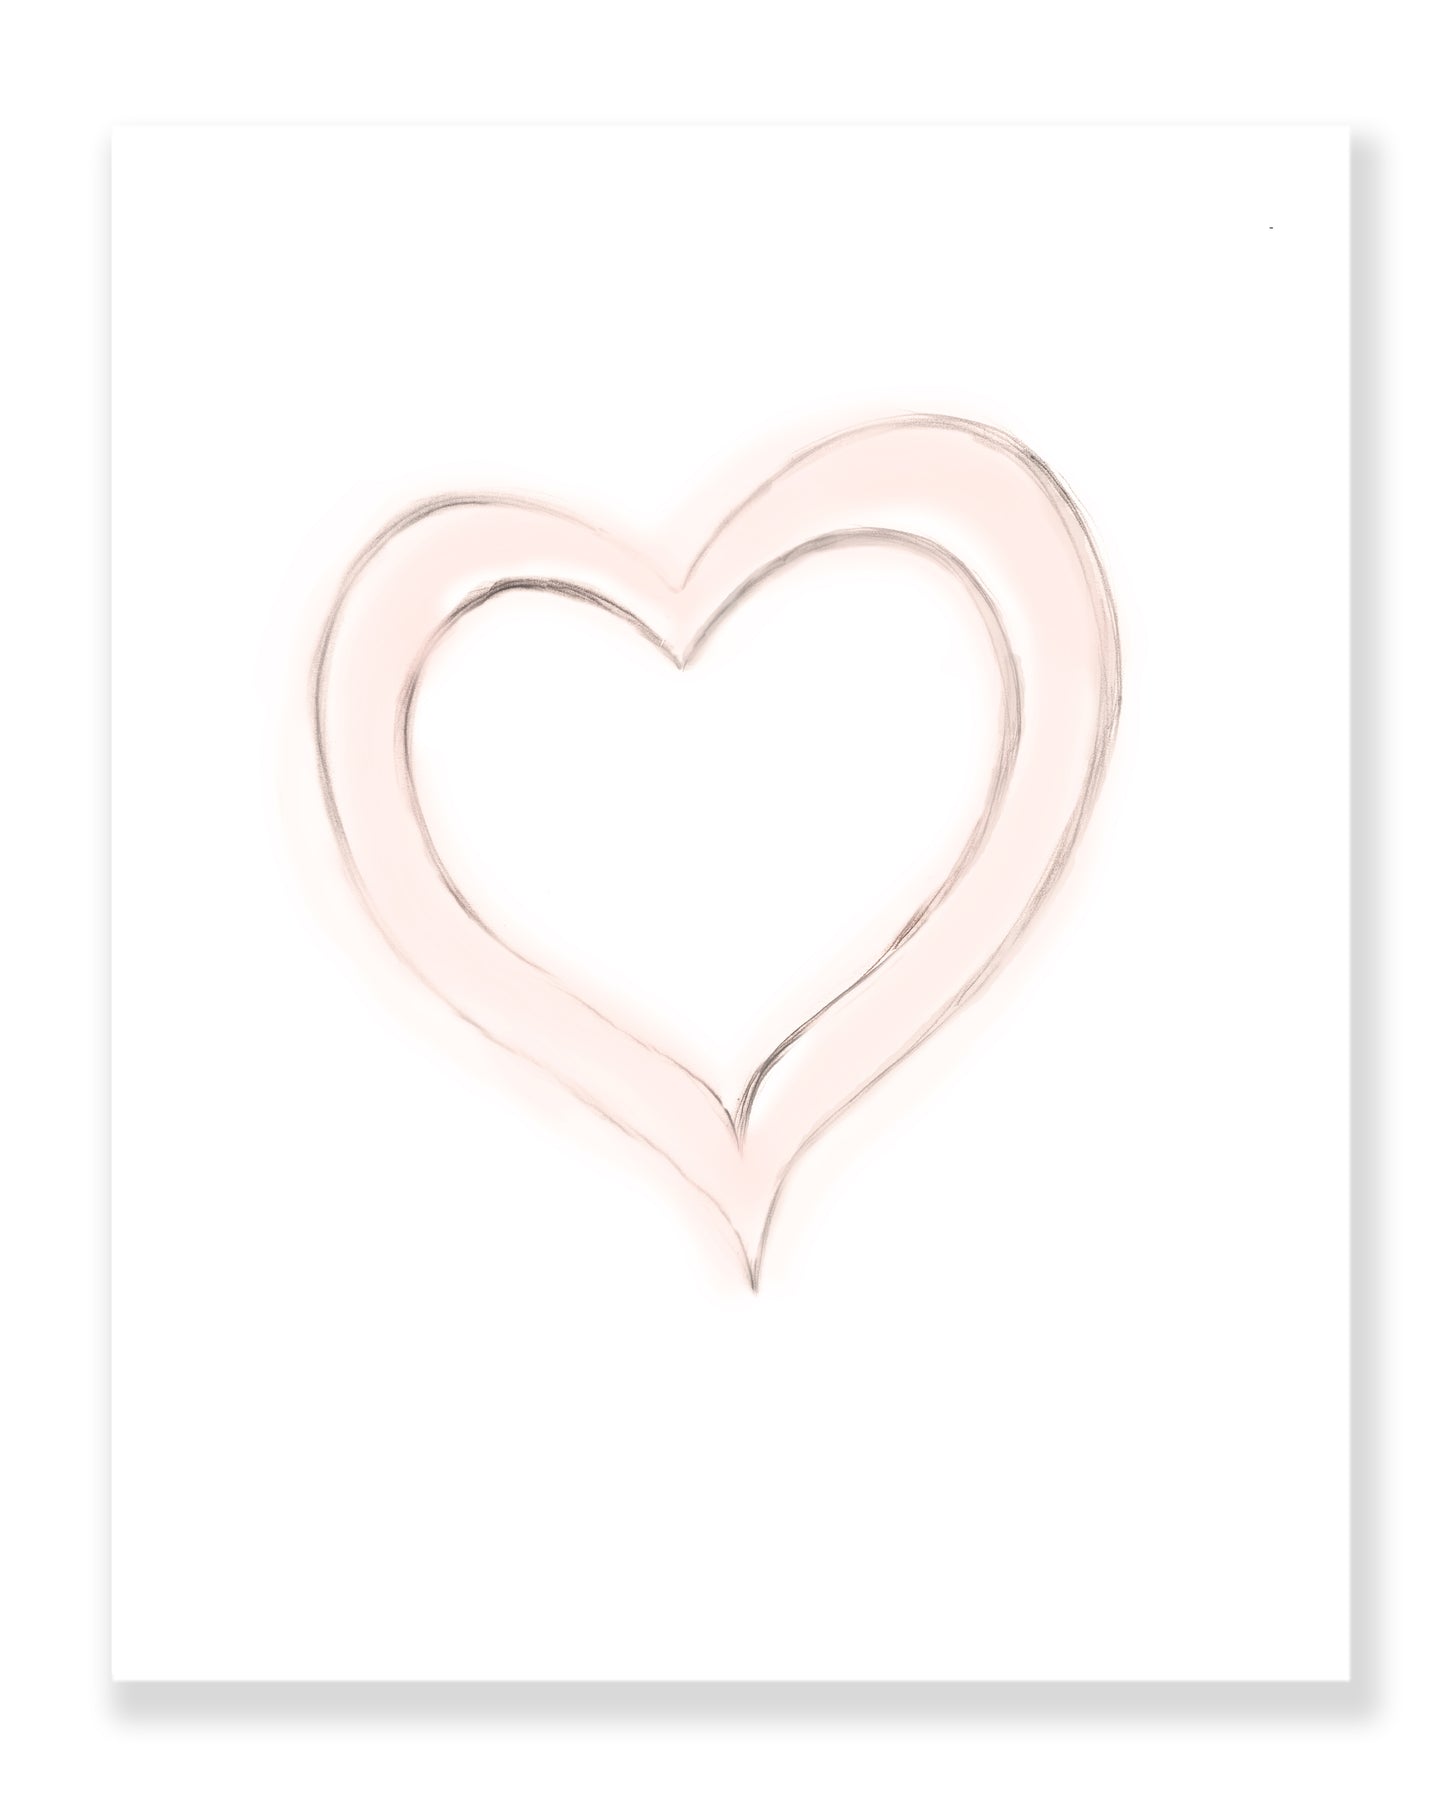 Love Heart Nursery Print in Sweet Blush- Studio Q - Art by Nicky Quartermaine Scott